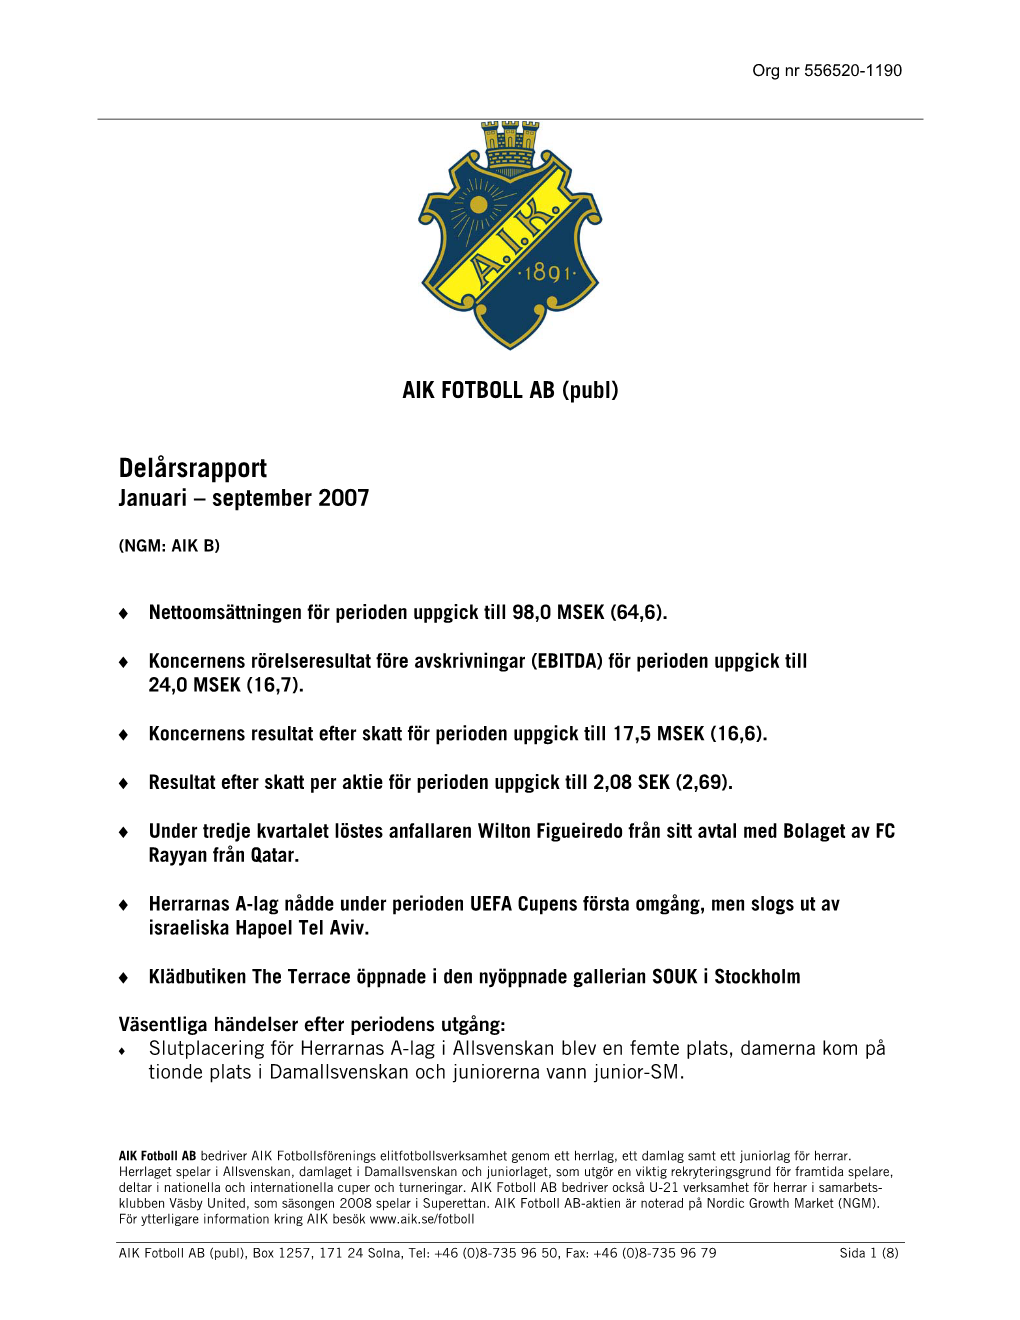 Delårsrapport Januari – September 2007